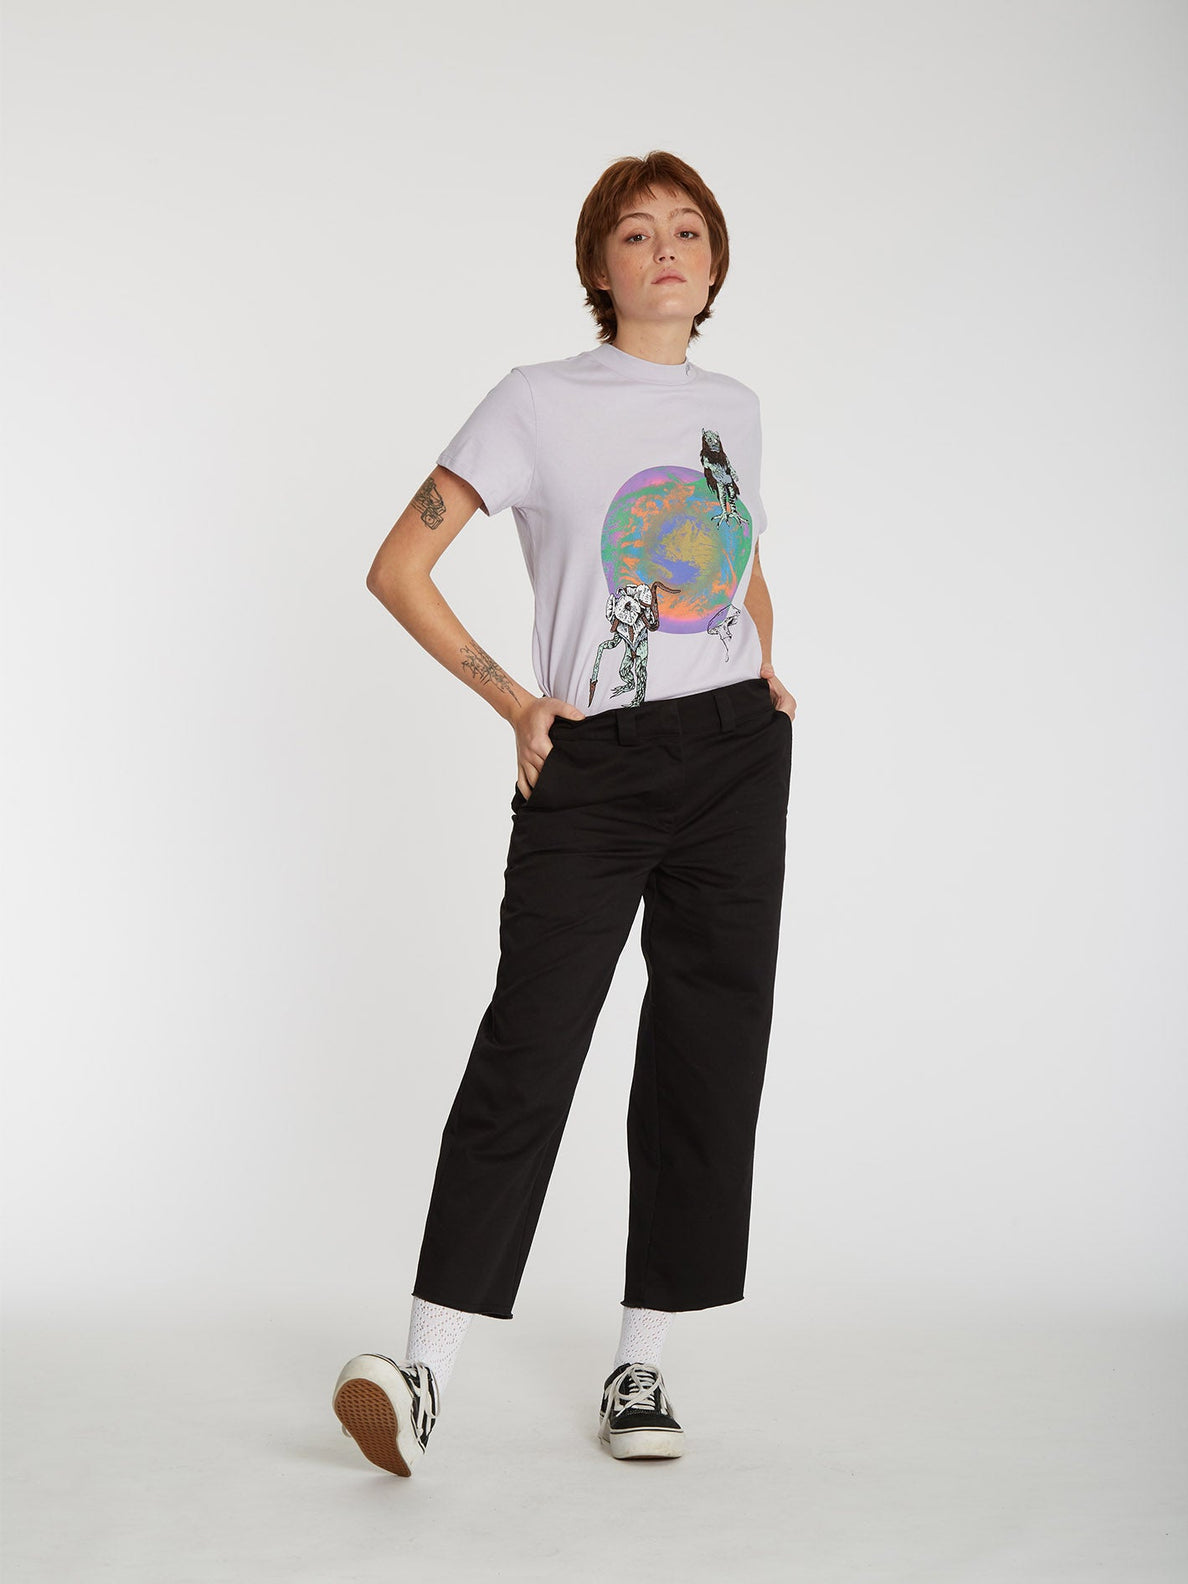 Chrissie Abbott X French T-shirt - LAVENDER (B3532208_LAV) [13]